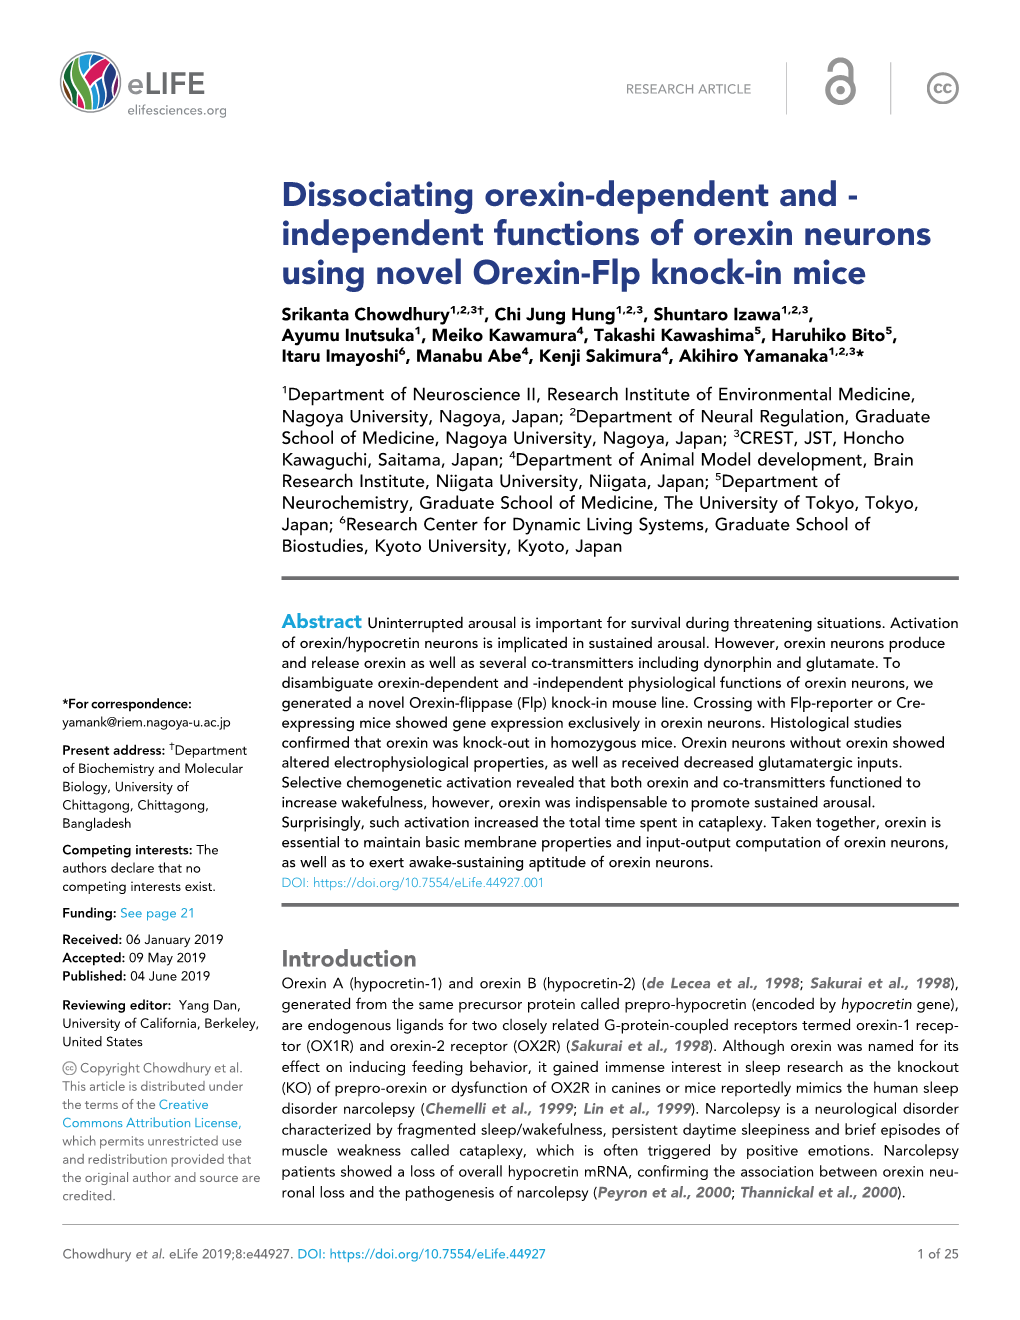 Dissociating Orexin-Dependent